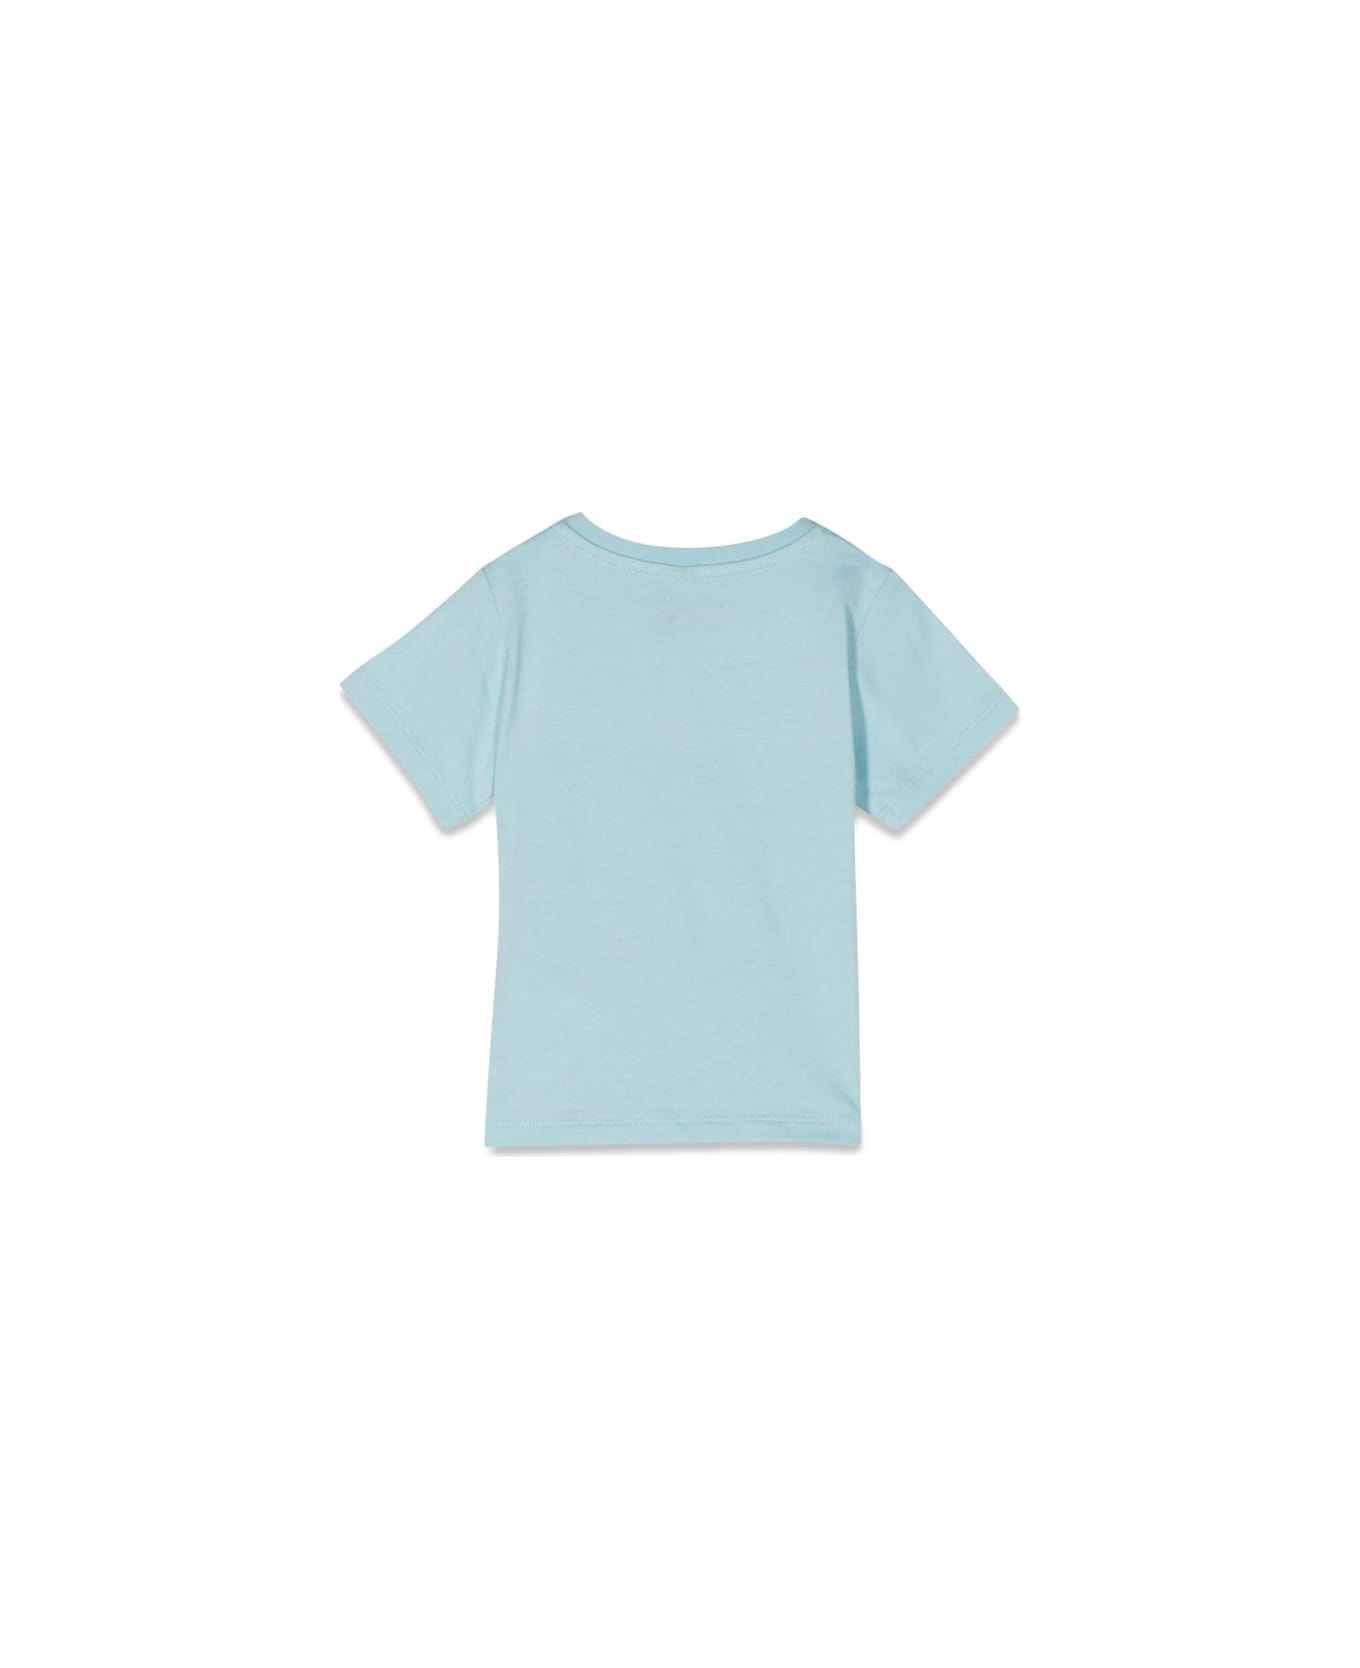 Stella McCartney T-shirt/top - BABY BLUE